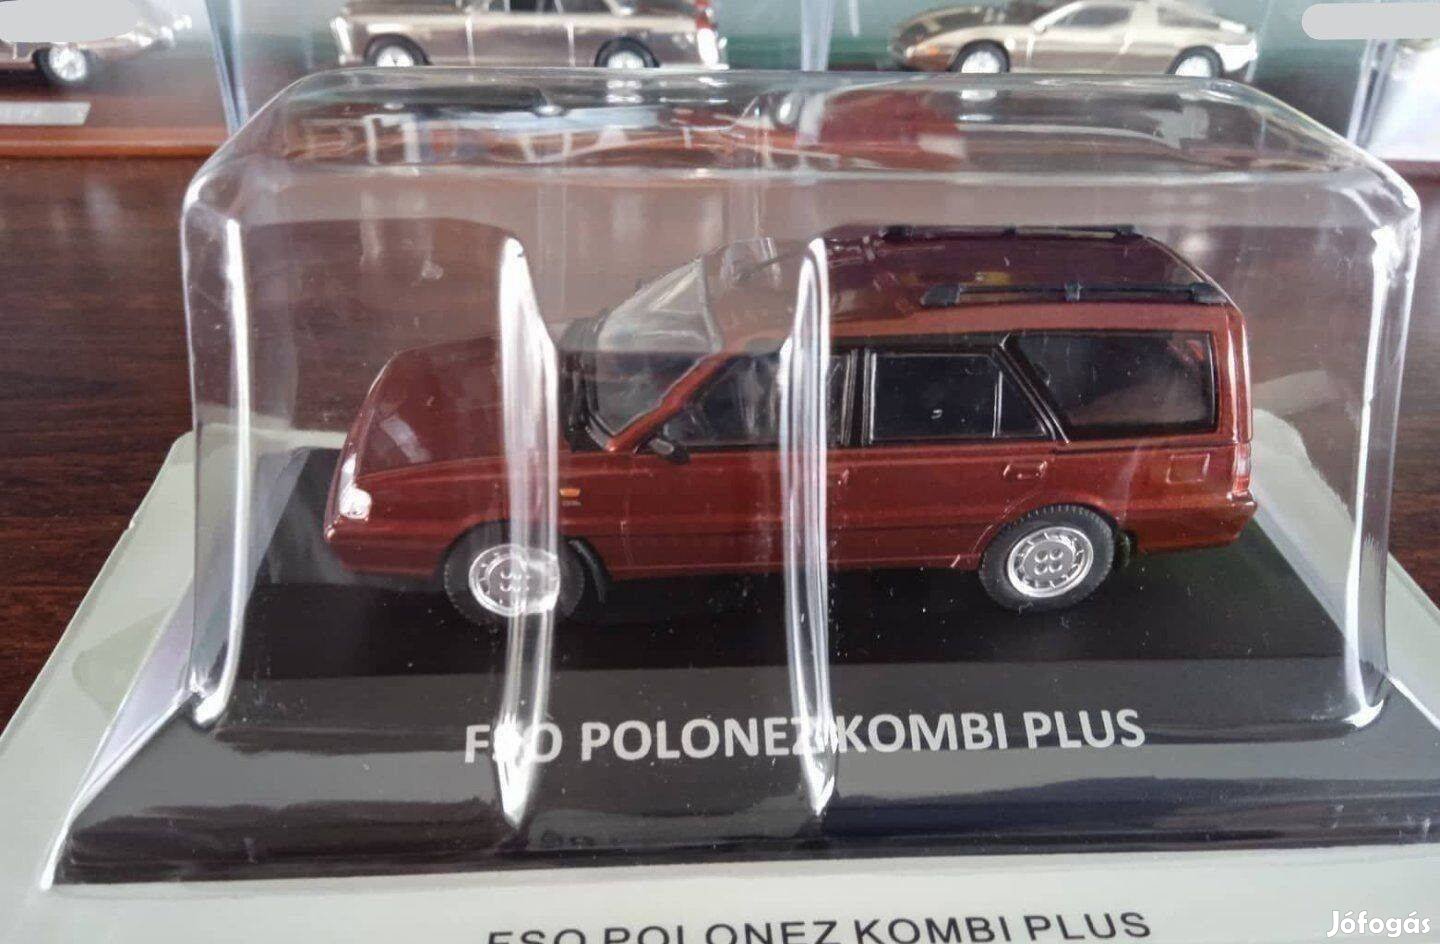 Polonez kombi plus kisauto modell 1/43 Eladó